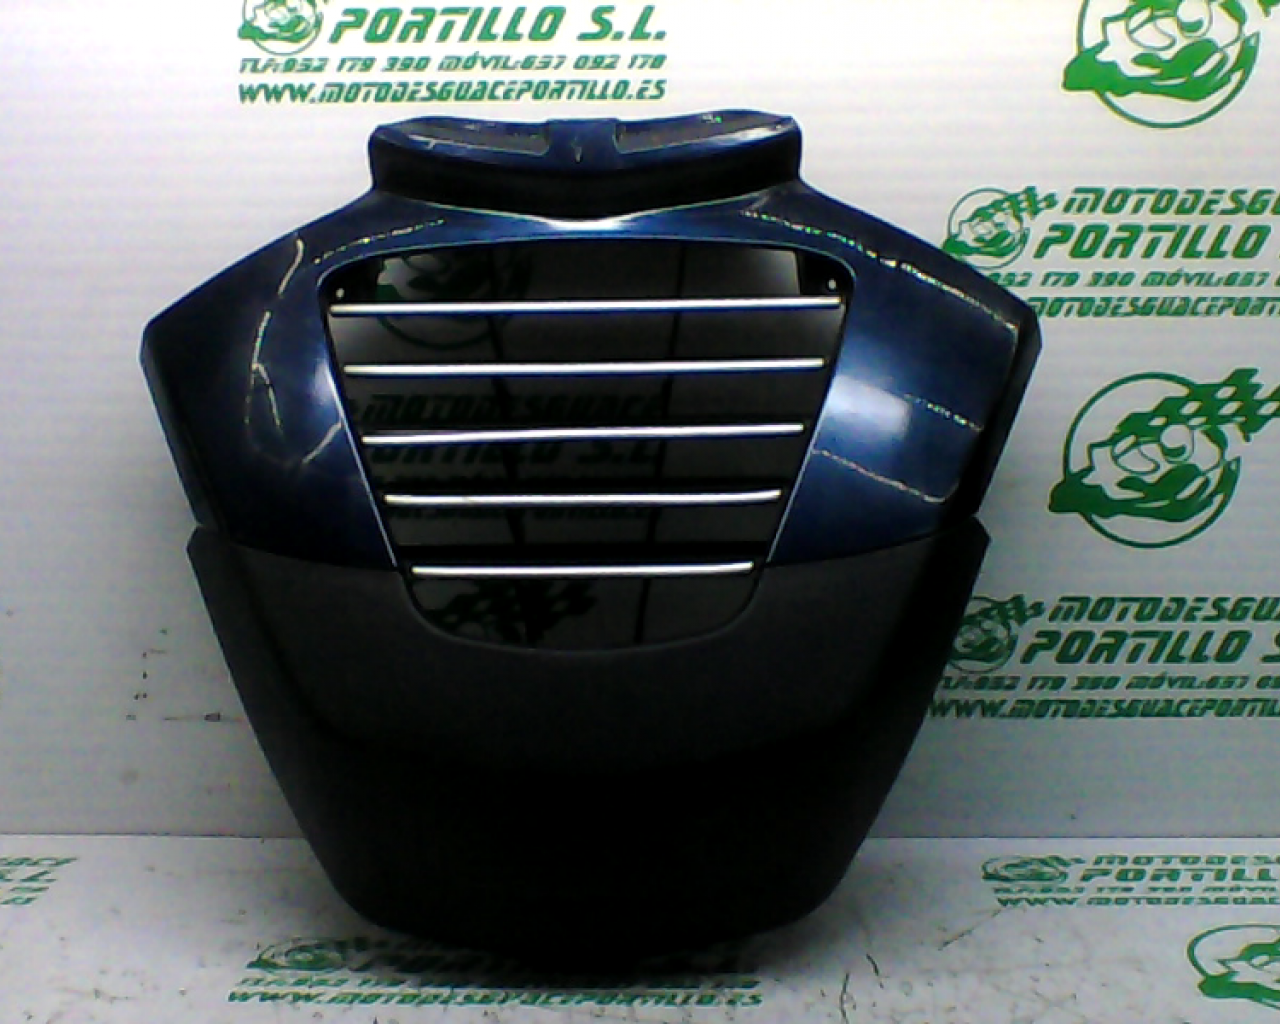 Frontal Piaggio MP3 250 RL (2009-2012)